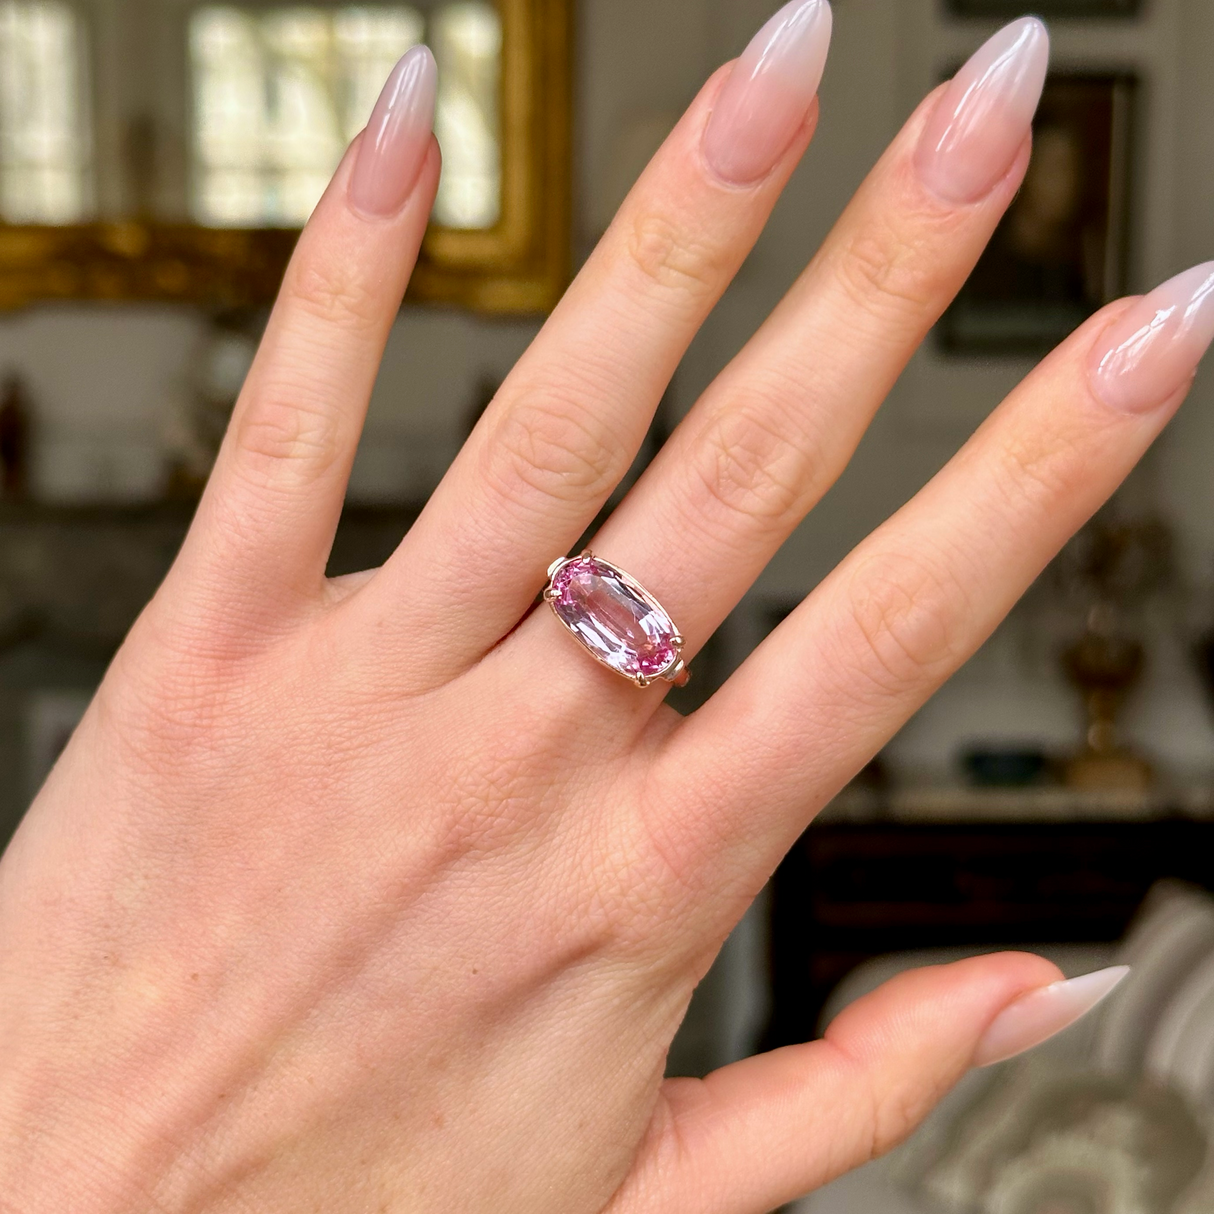 Vintage, 1940s Pale Pink Topaz Ring, worn on hand. 